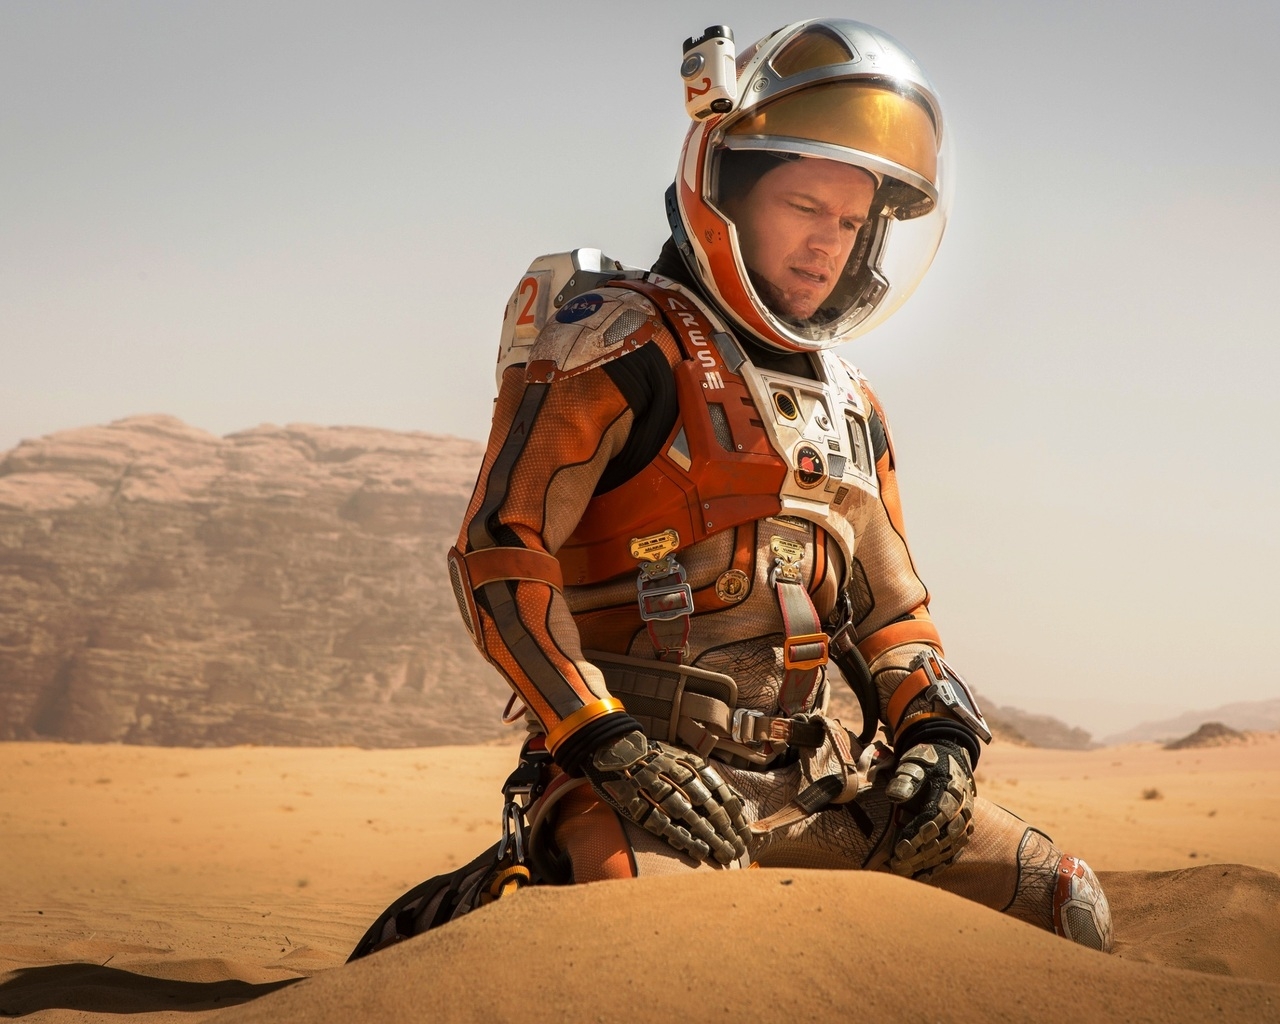 The Martian Matt Damon for 1280 x 1024 resolution